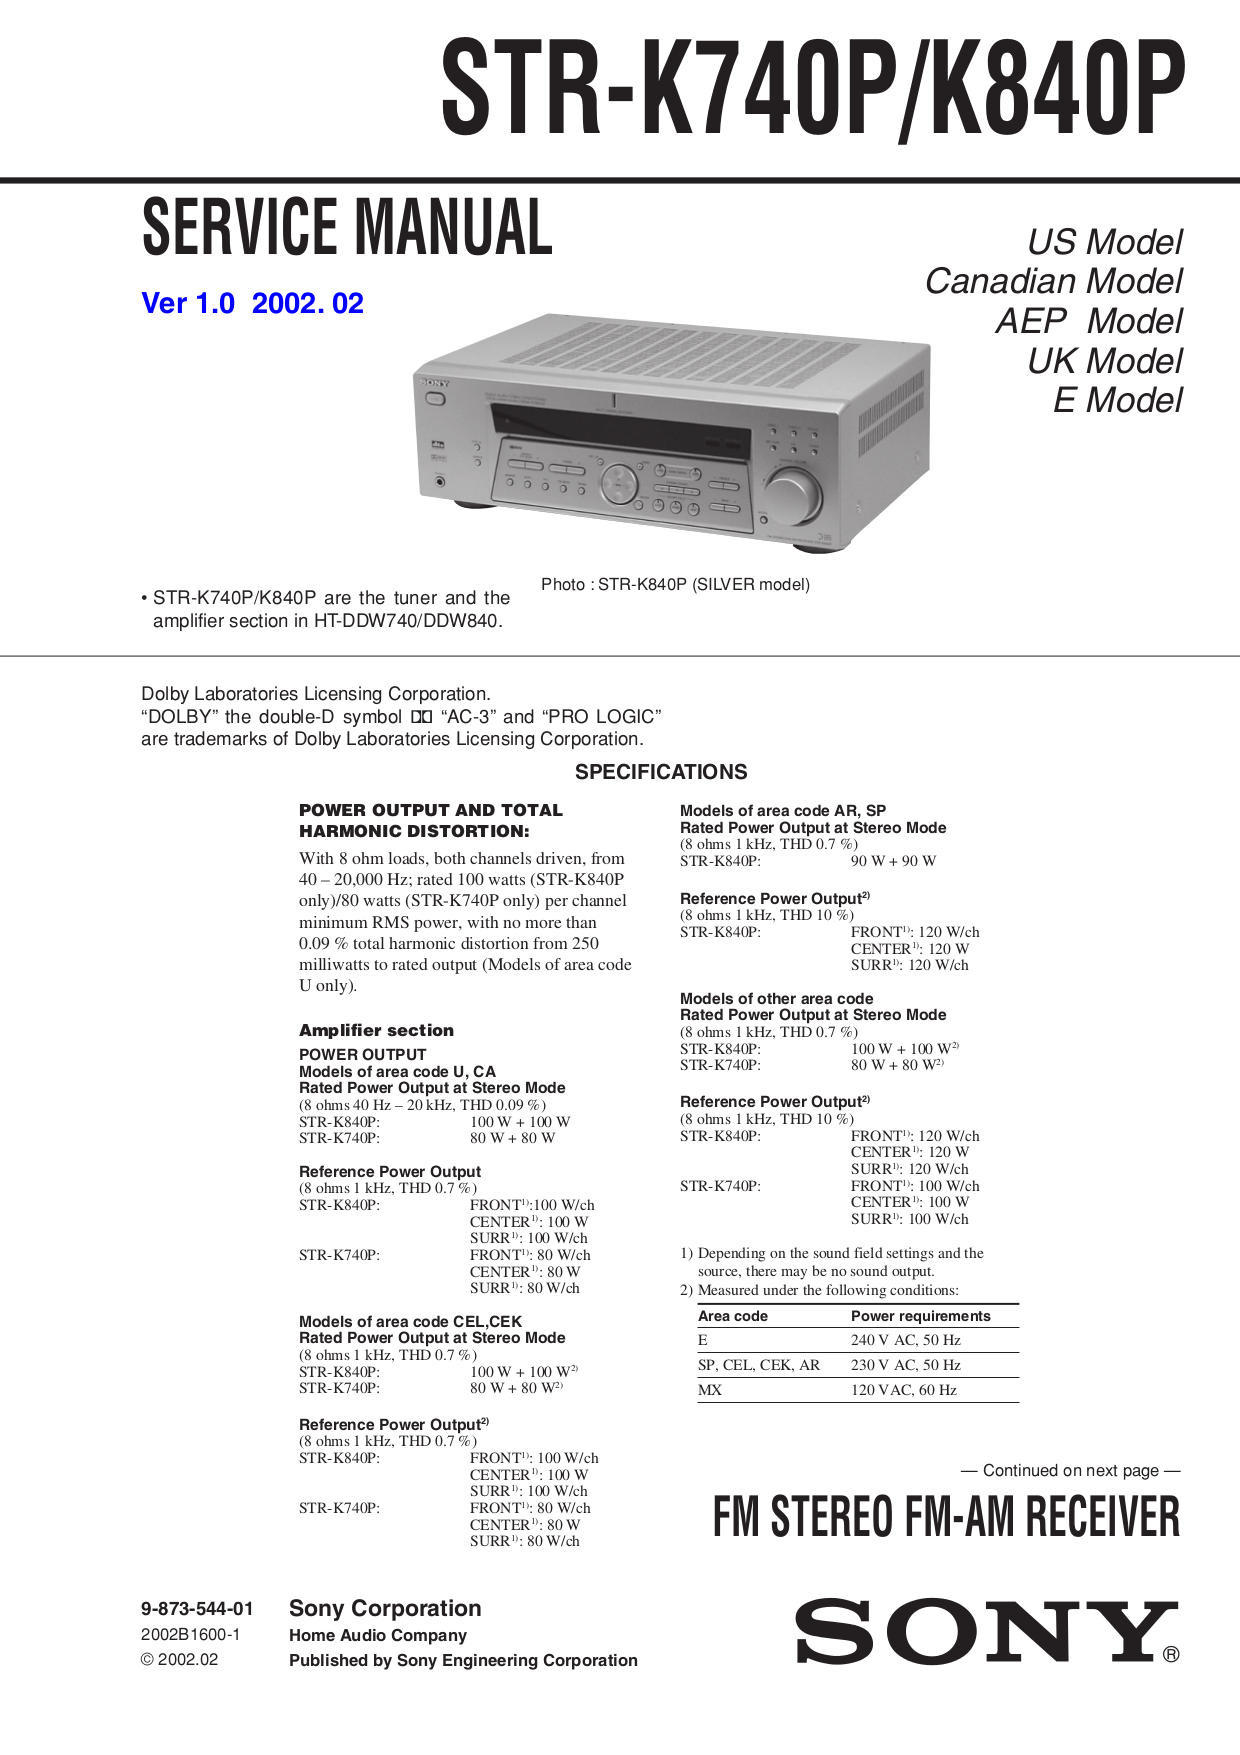 Download free pdf for Sony STR-K740P Receiver manual